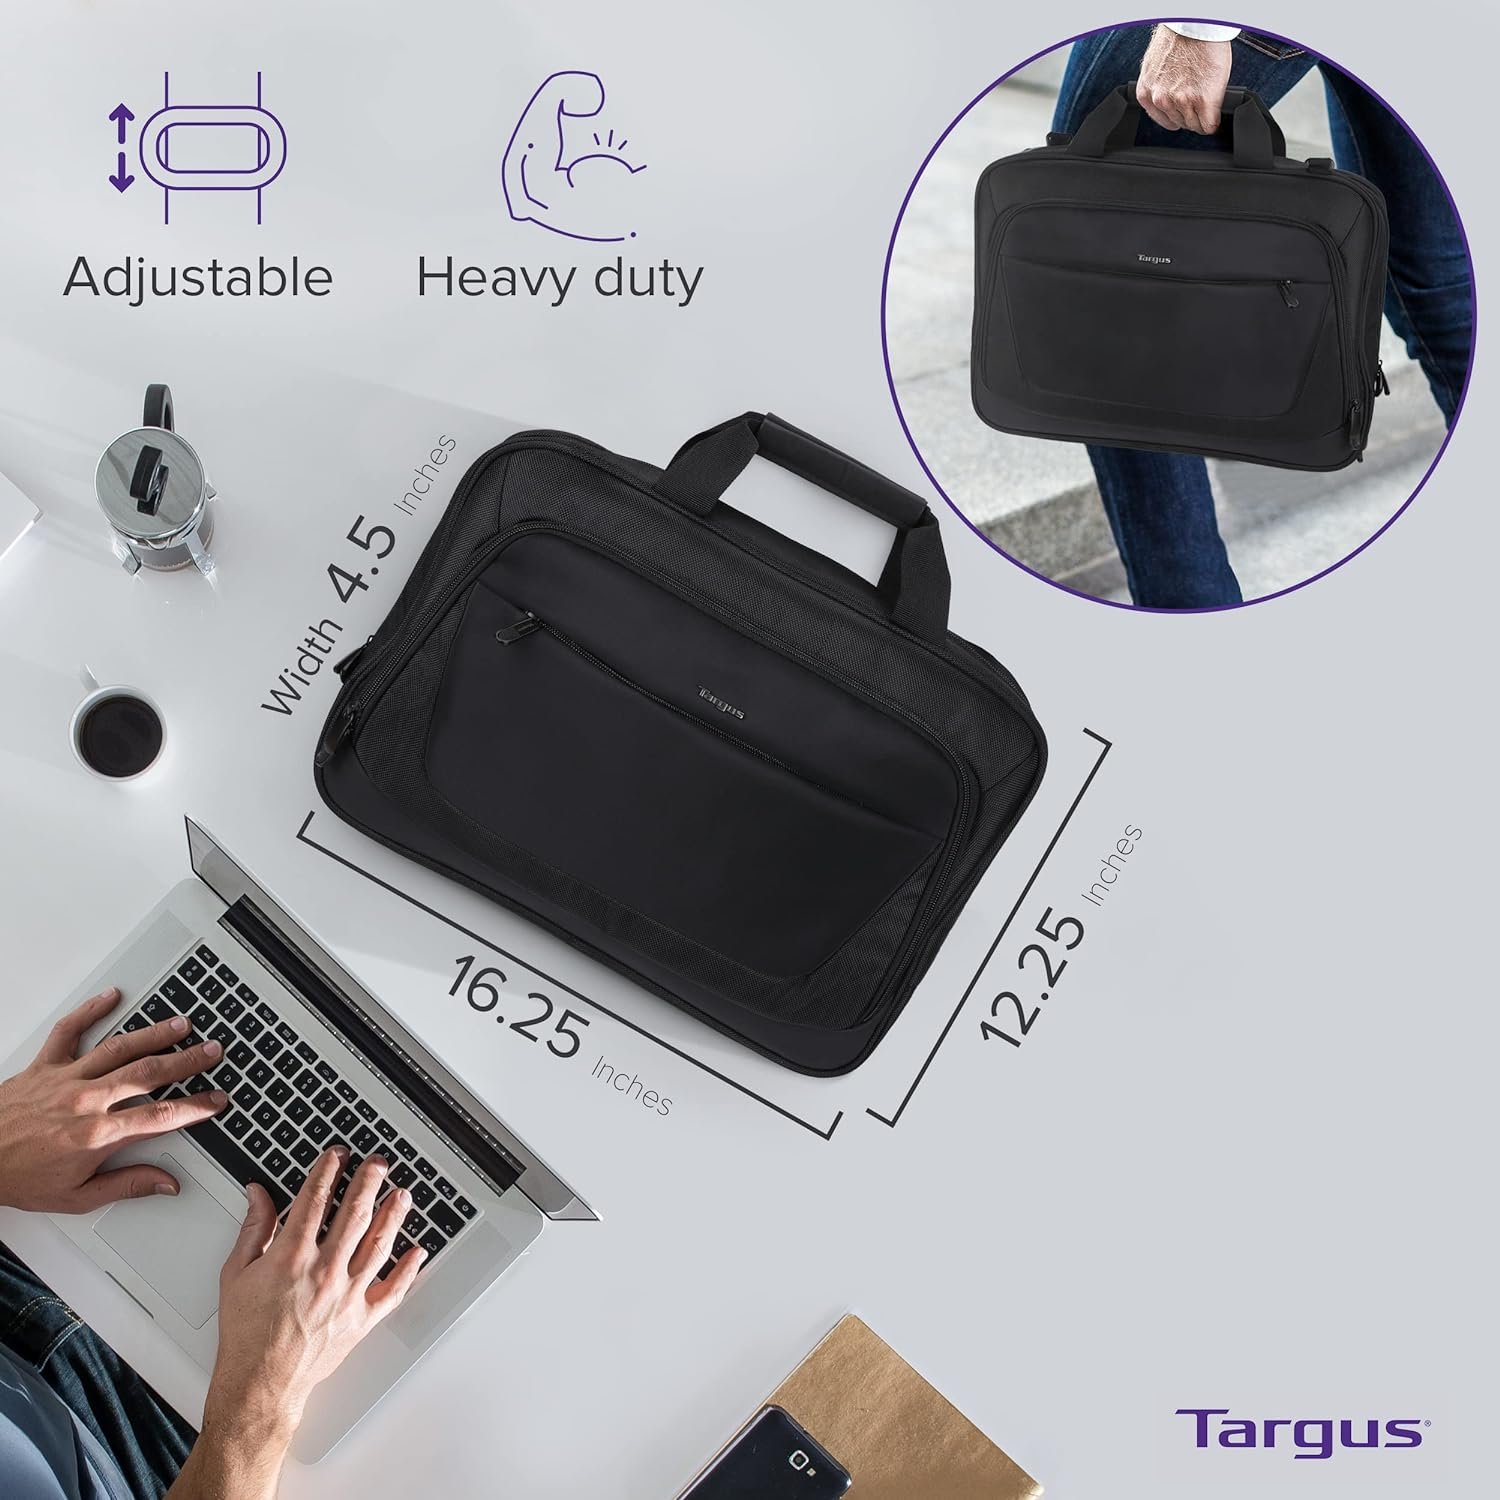 Targus CityLite Laptop Briefcase Shoulder Messenger Bag review